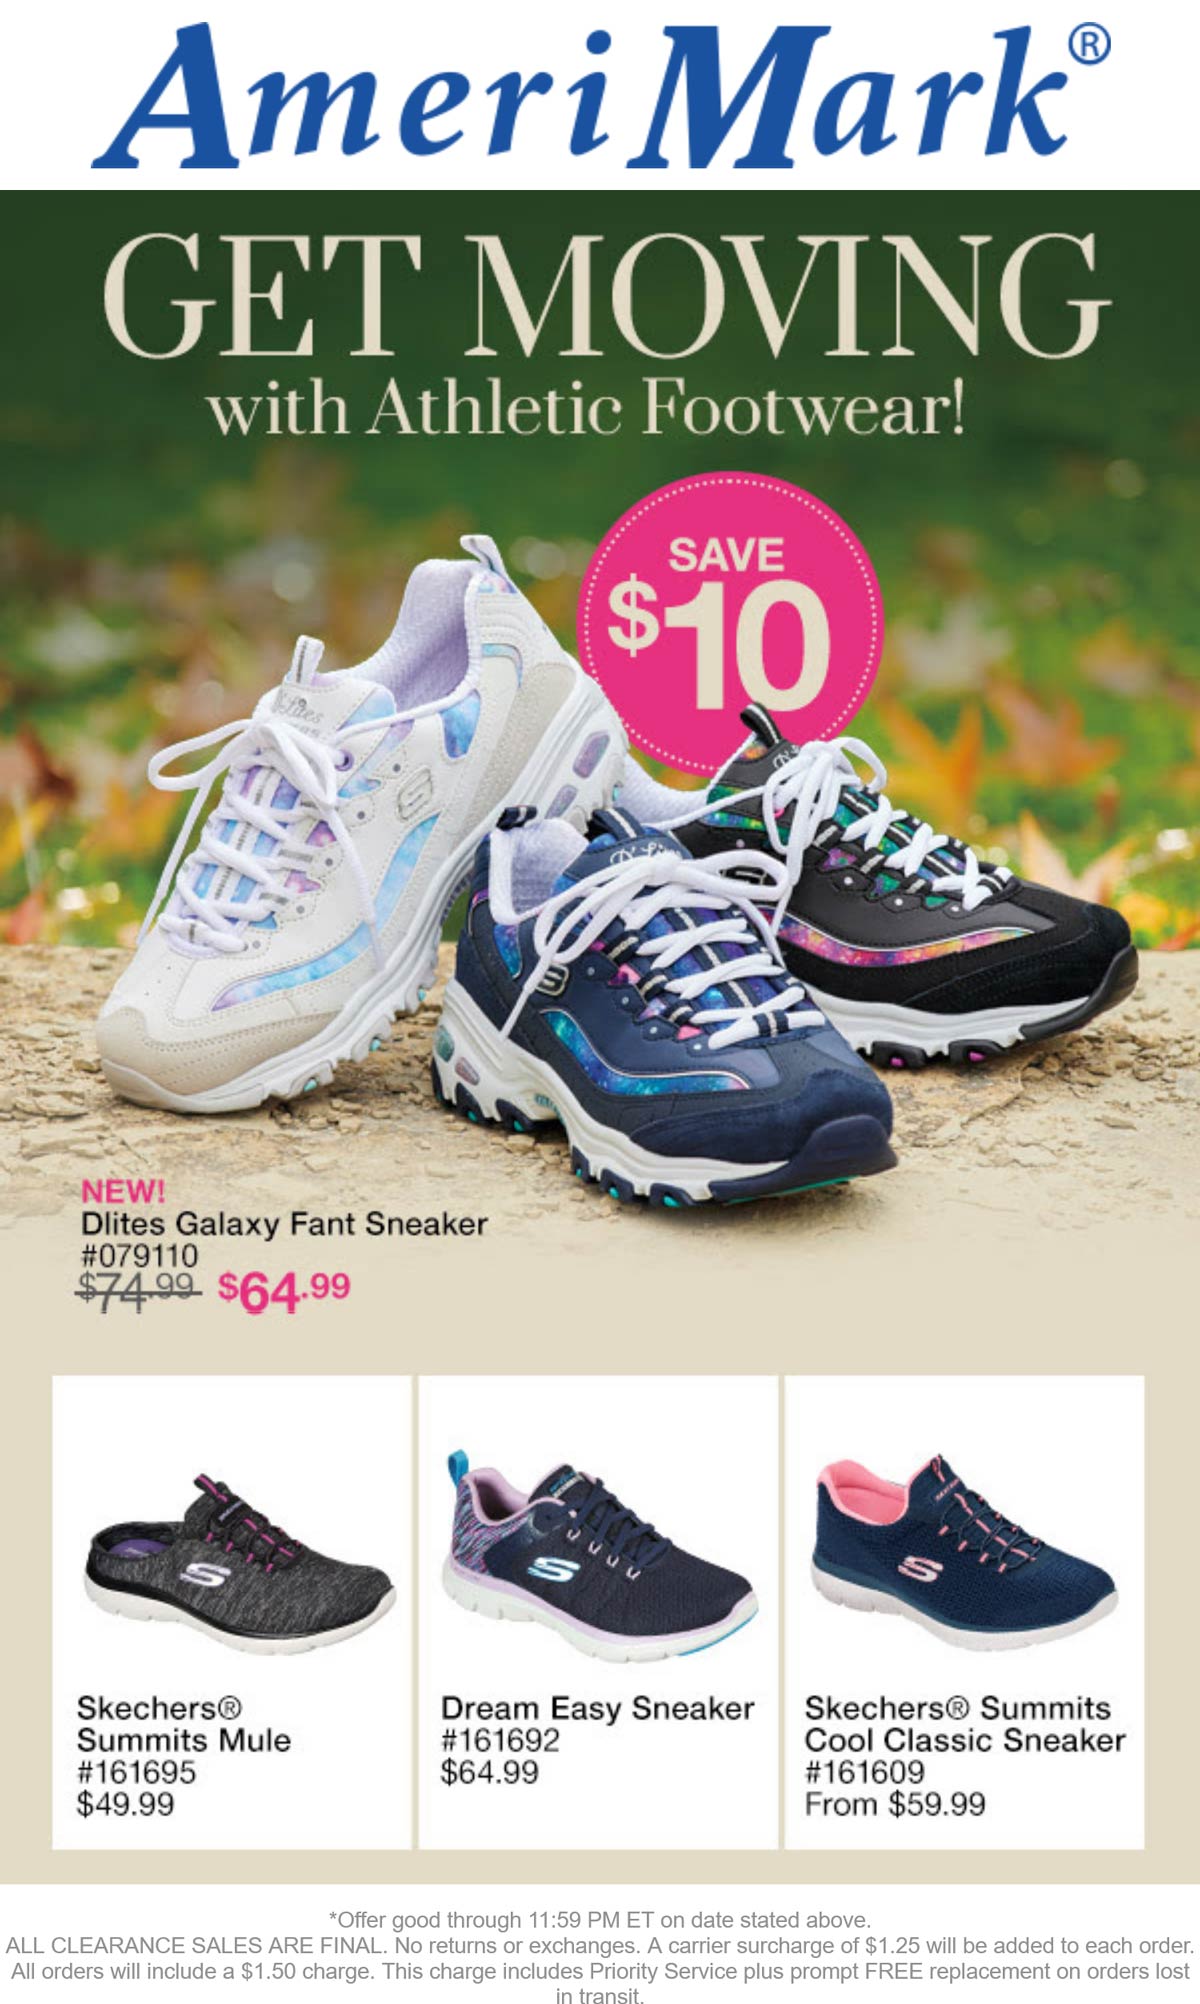 Amerimark stores Coupon  $10 off athletic footwear at Amerimark #amerimark 